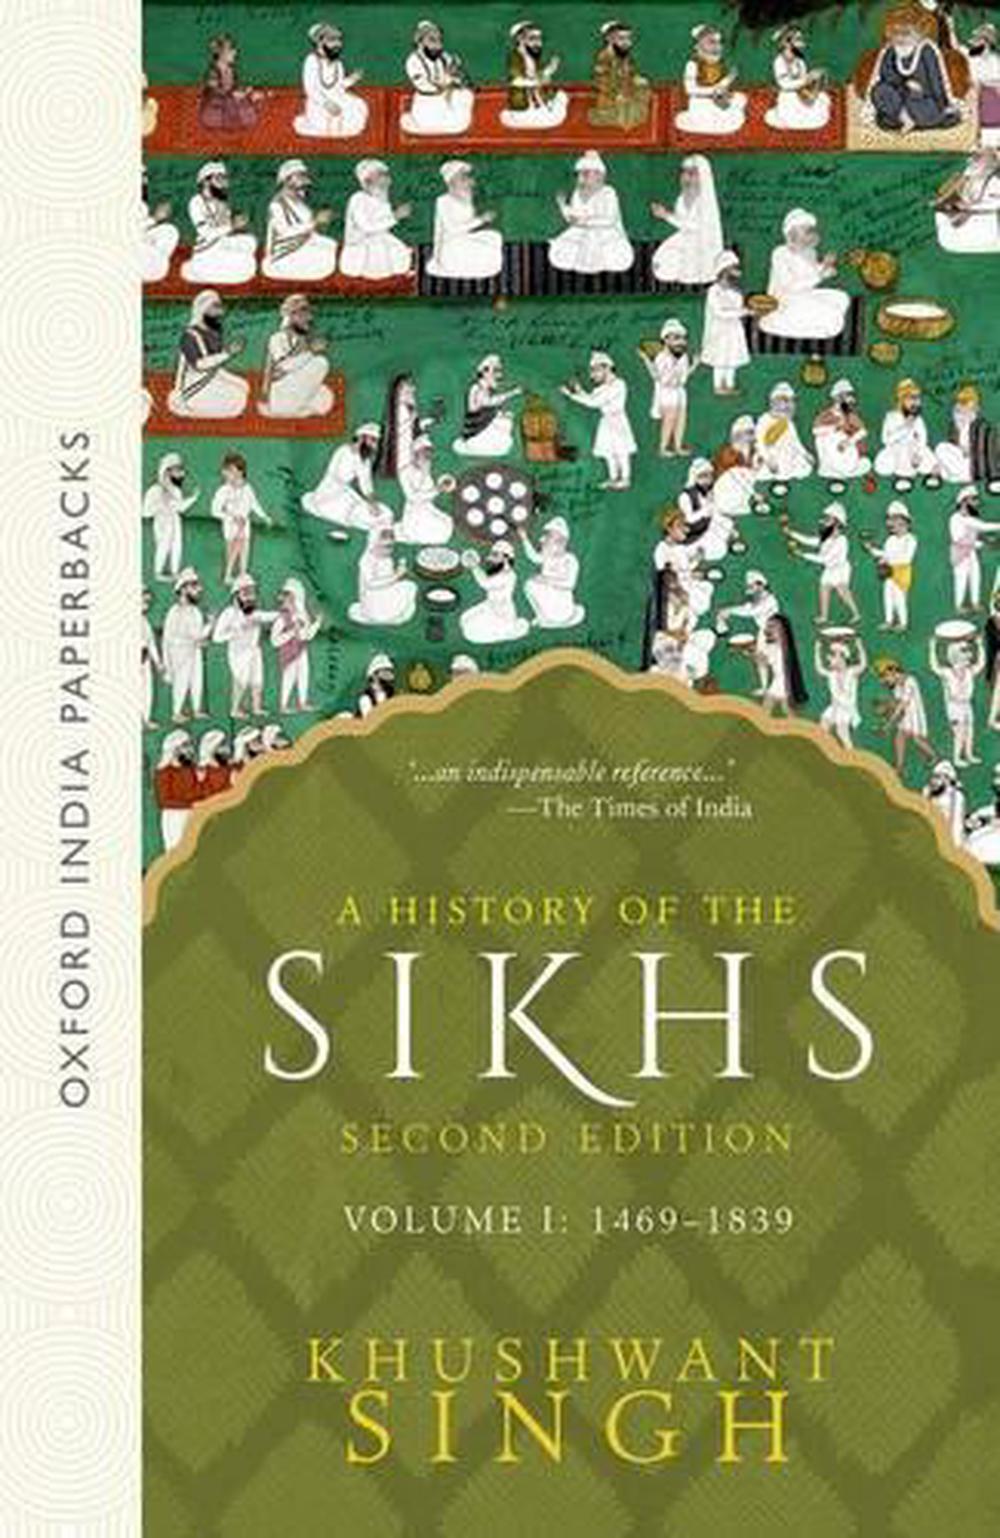 phd in sikh history